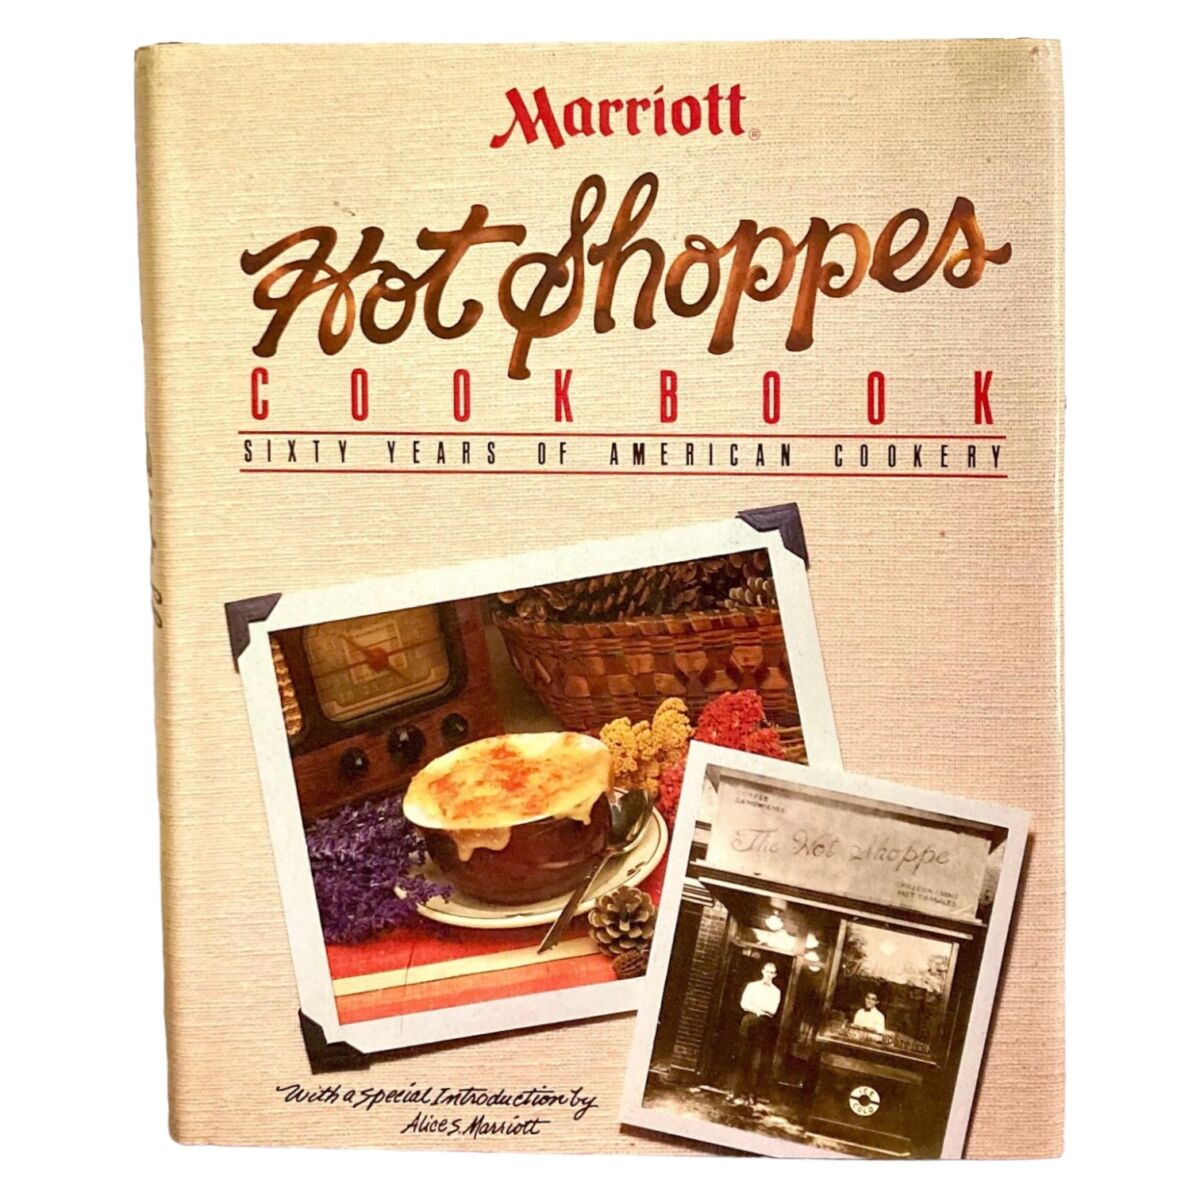 Hot Shoppes Cookbook